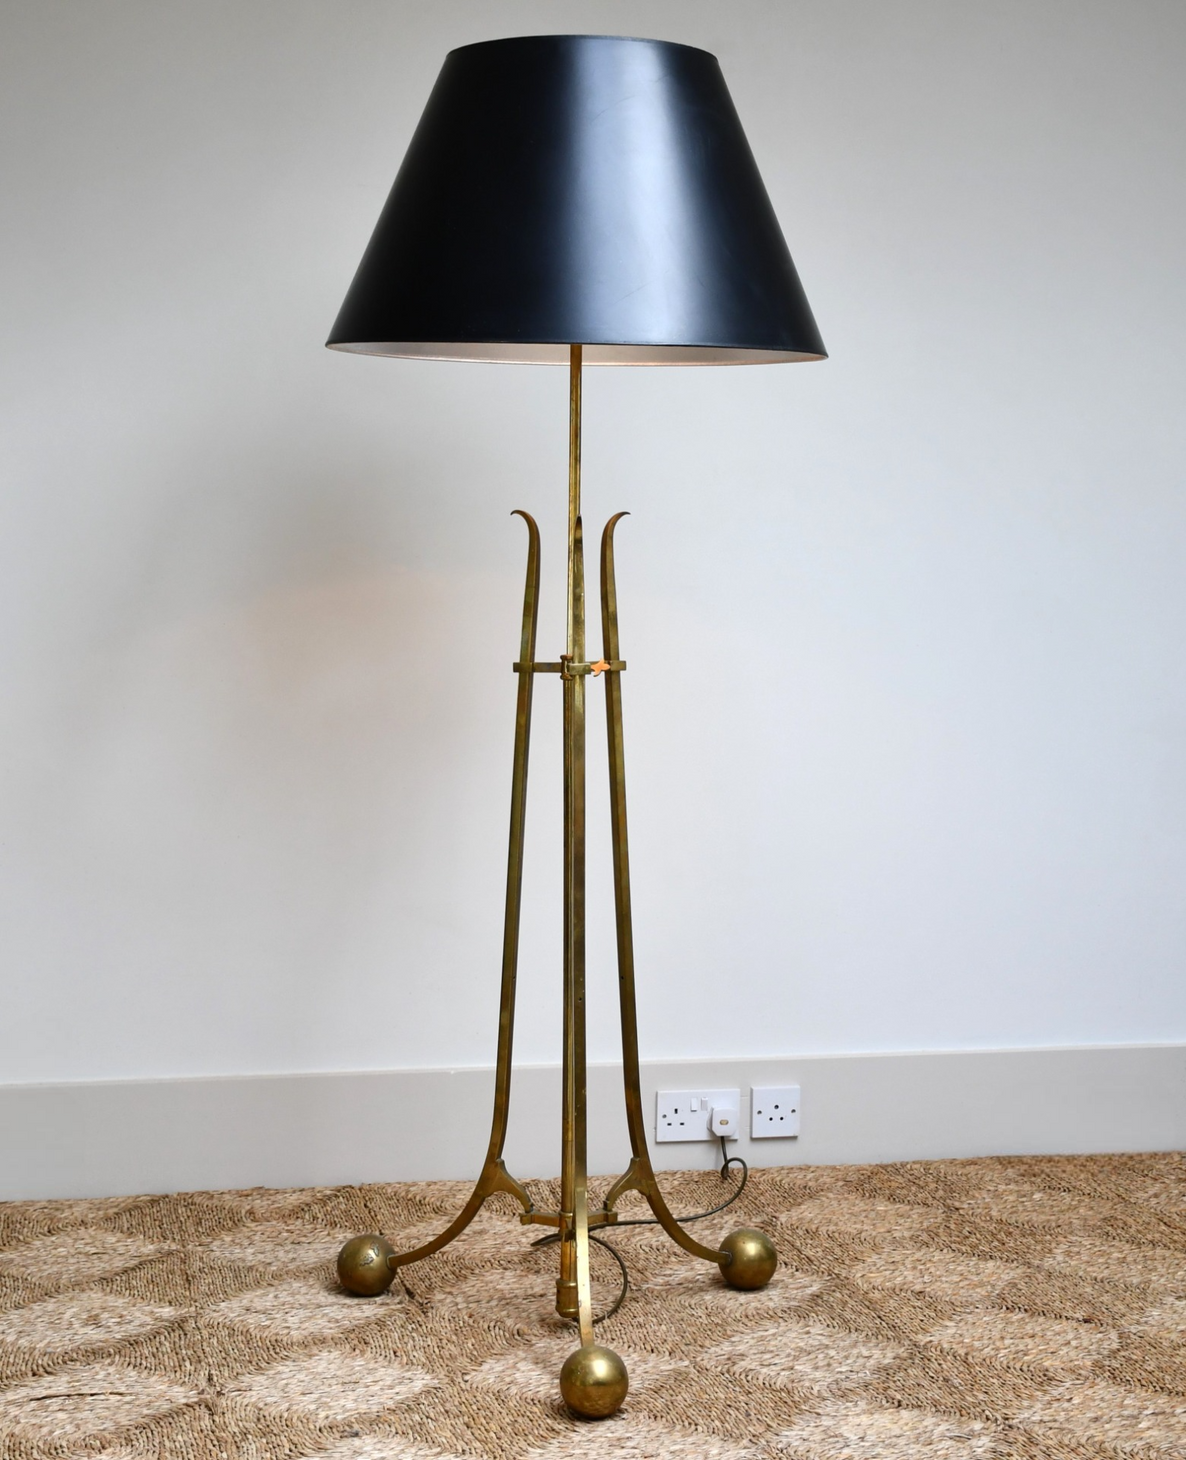 Early 20 Century - Brass Standard Lamp